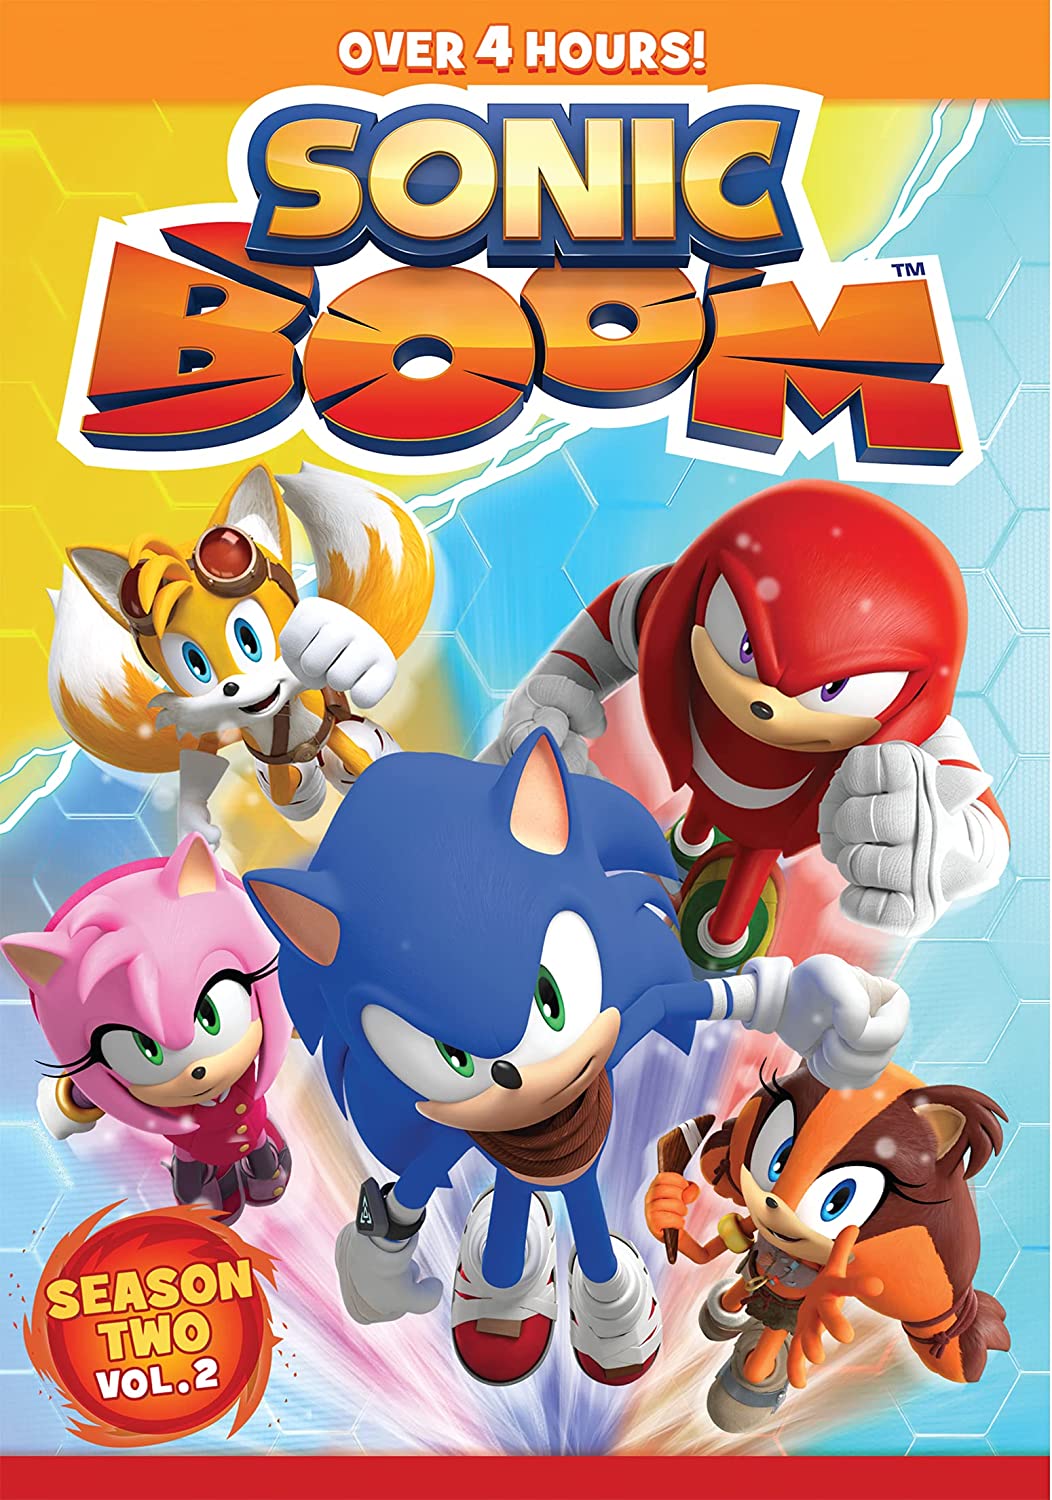 Sonic tab. Соник (DVD). Sonic Dash 2: Sonic Boom обложка. Sonic DVD Rus.